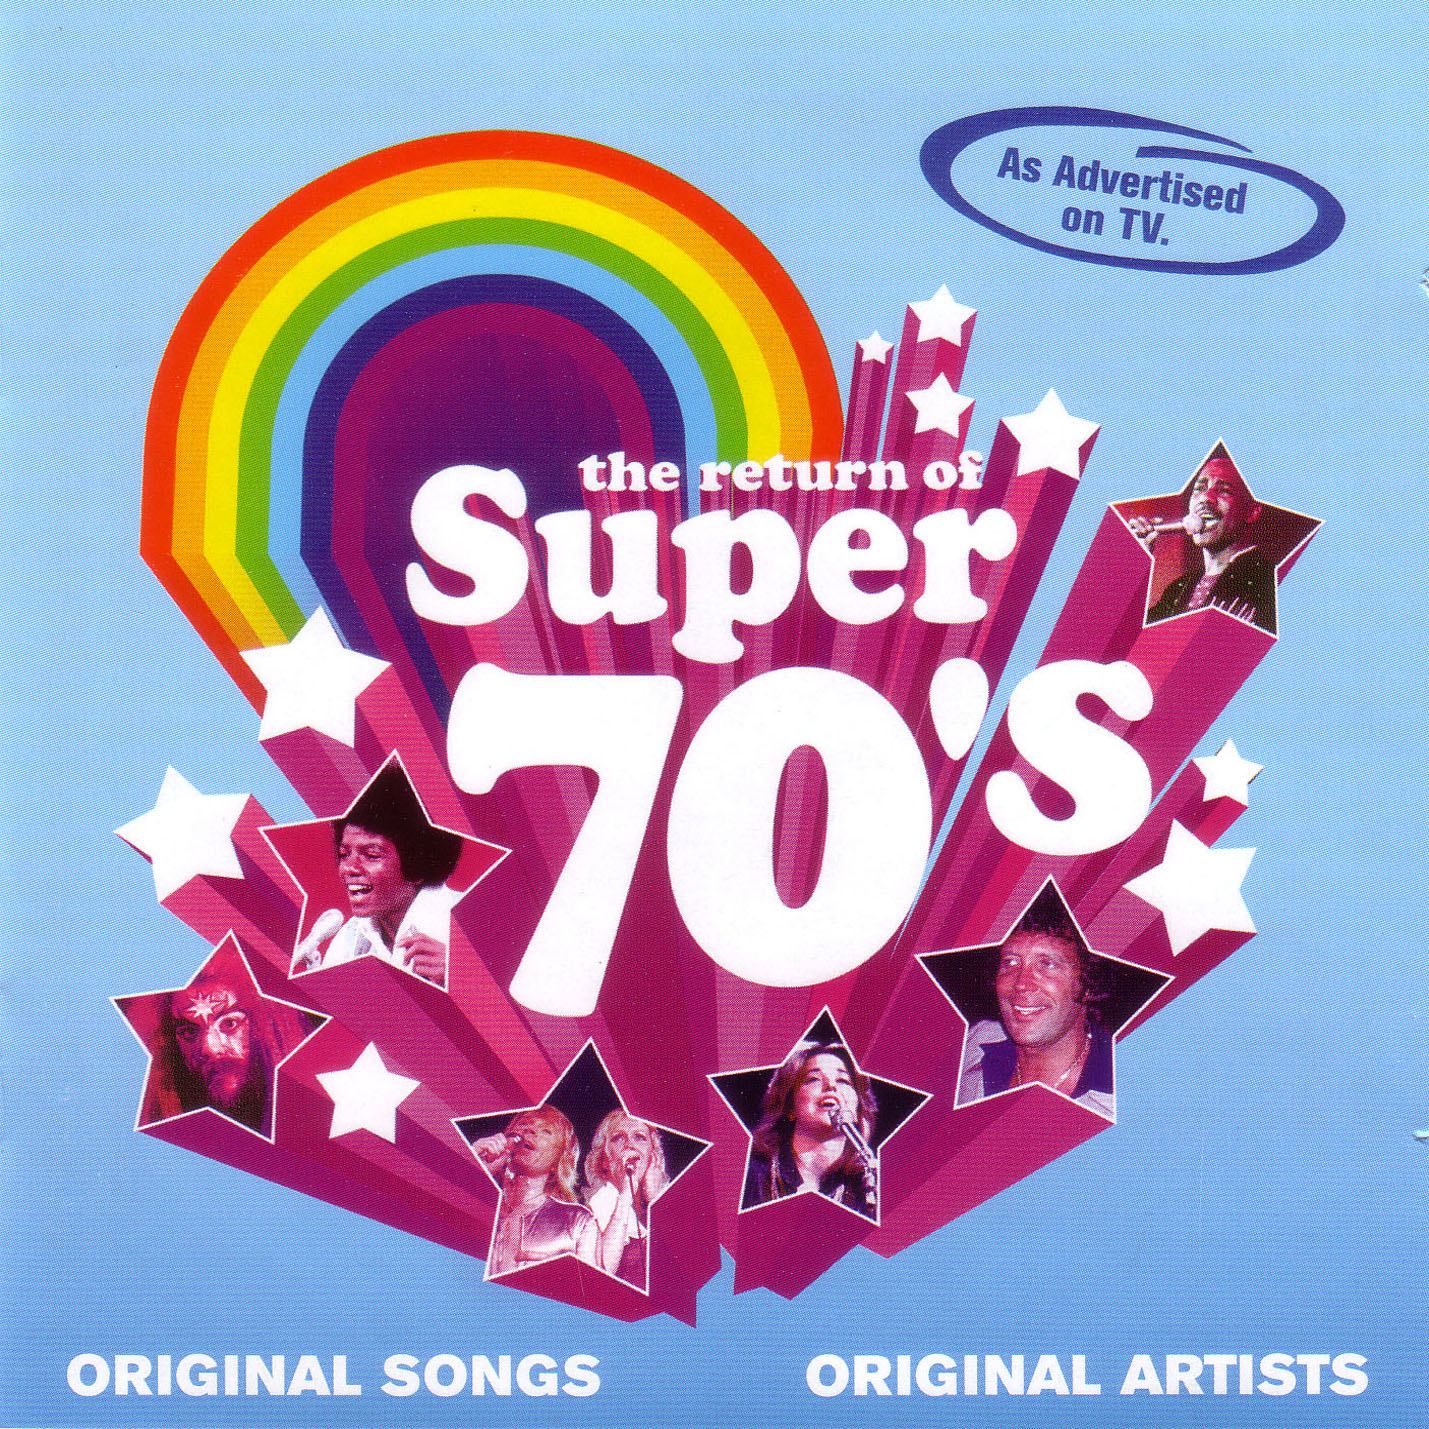 Super return. Super a70. Супер сборник 2 CD 2003. Super Hits of the 70s. Va - the #1 album super 70s Pop (3 CDS) (2020).